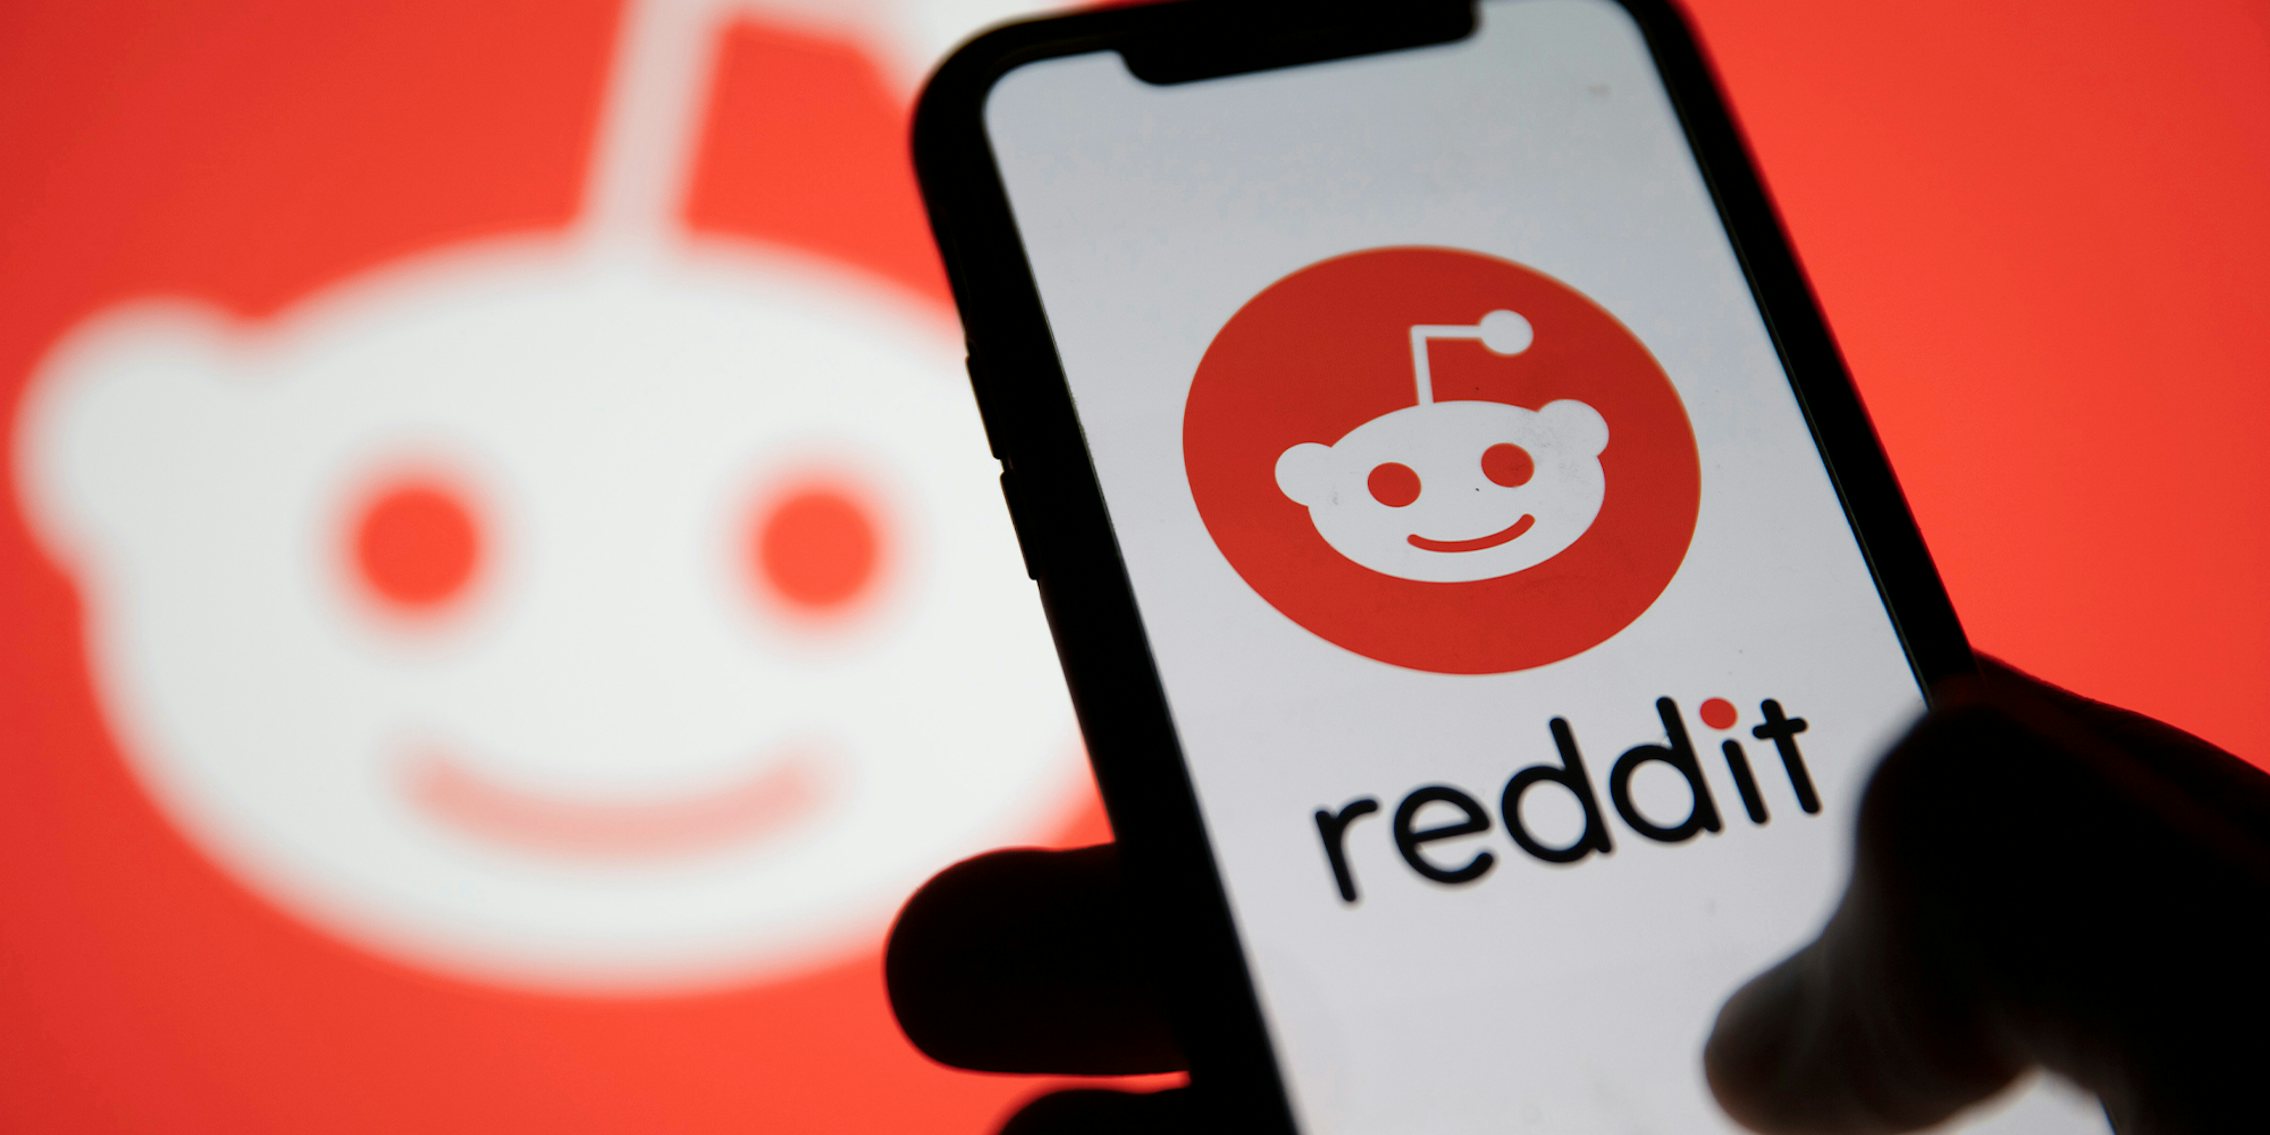 Reddit logo displayed on a smartphone device